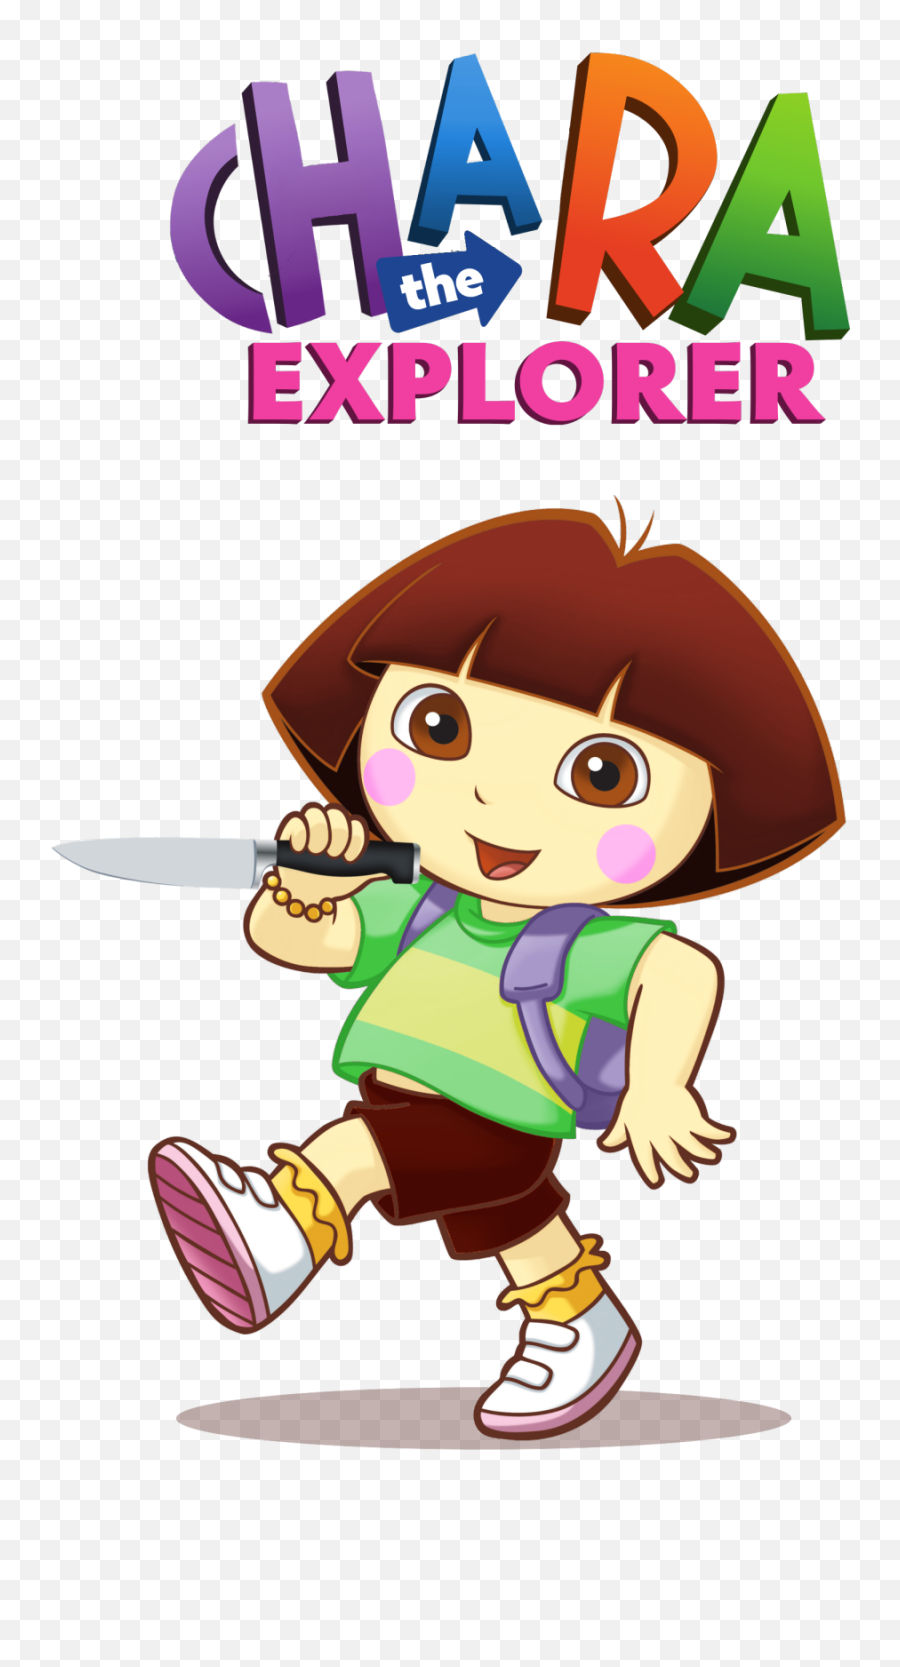 Undertale Chara The Explorer Clipart - Dora The Explorer Emoji,Explorer Clipart